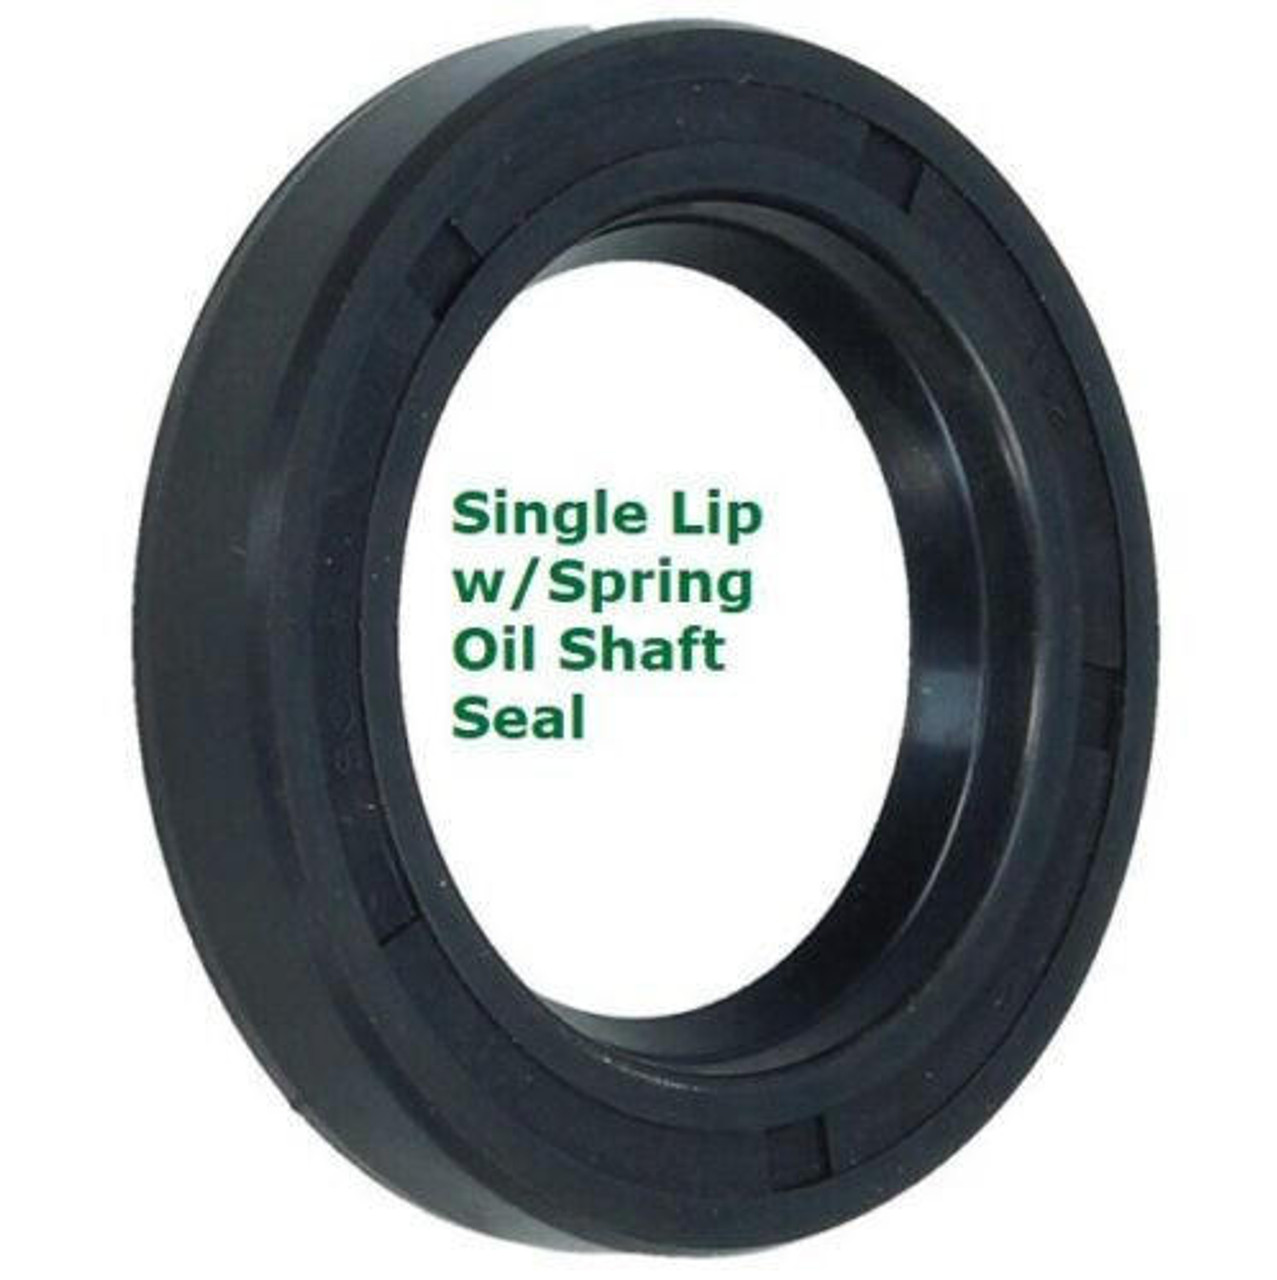 Metric Oil Shaft Seal 200 x 235 x 18mm   Single Lip   Price for 1 pc